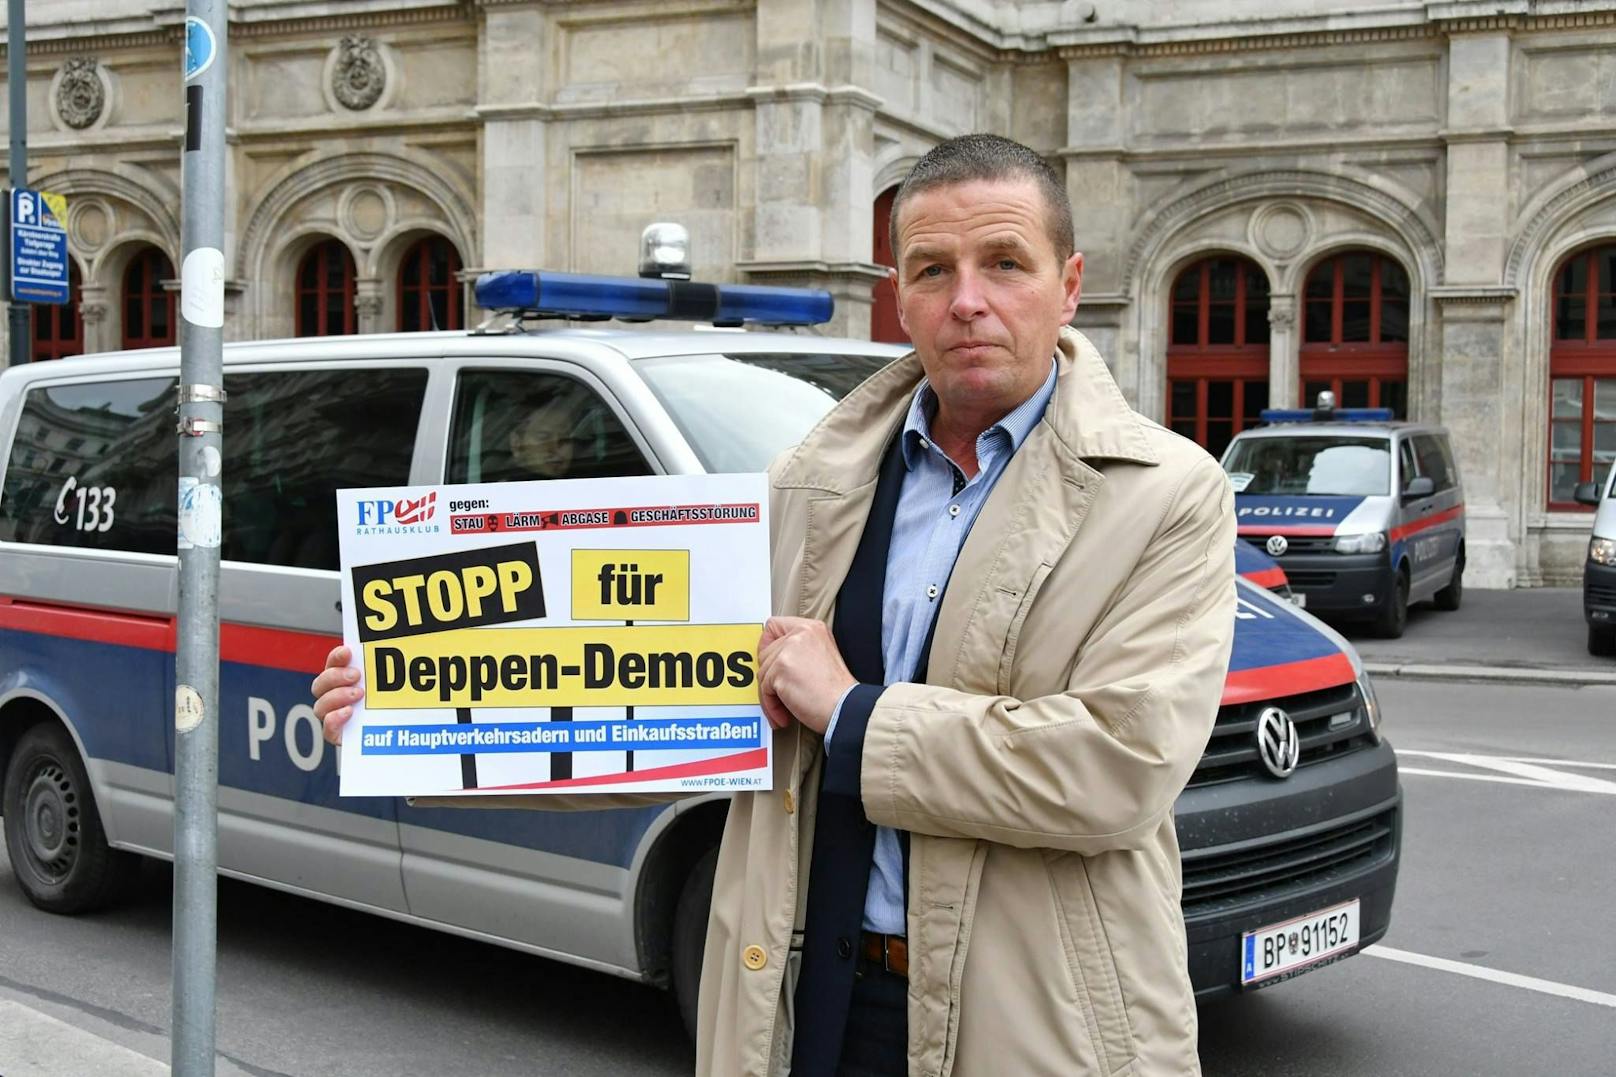 Da war die FPÖ noch gegen Demos: Toni Mahdalik machte gegen "Deppen-Demos" mobil.